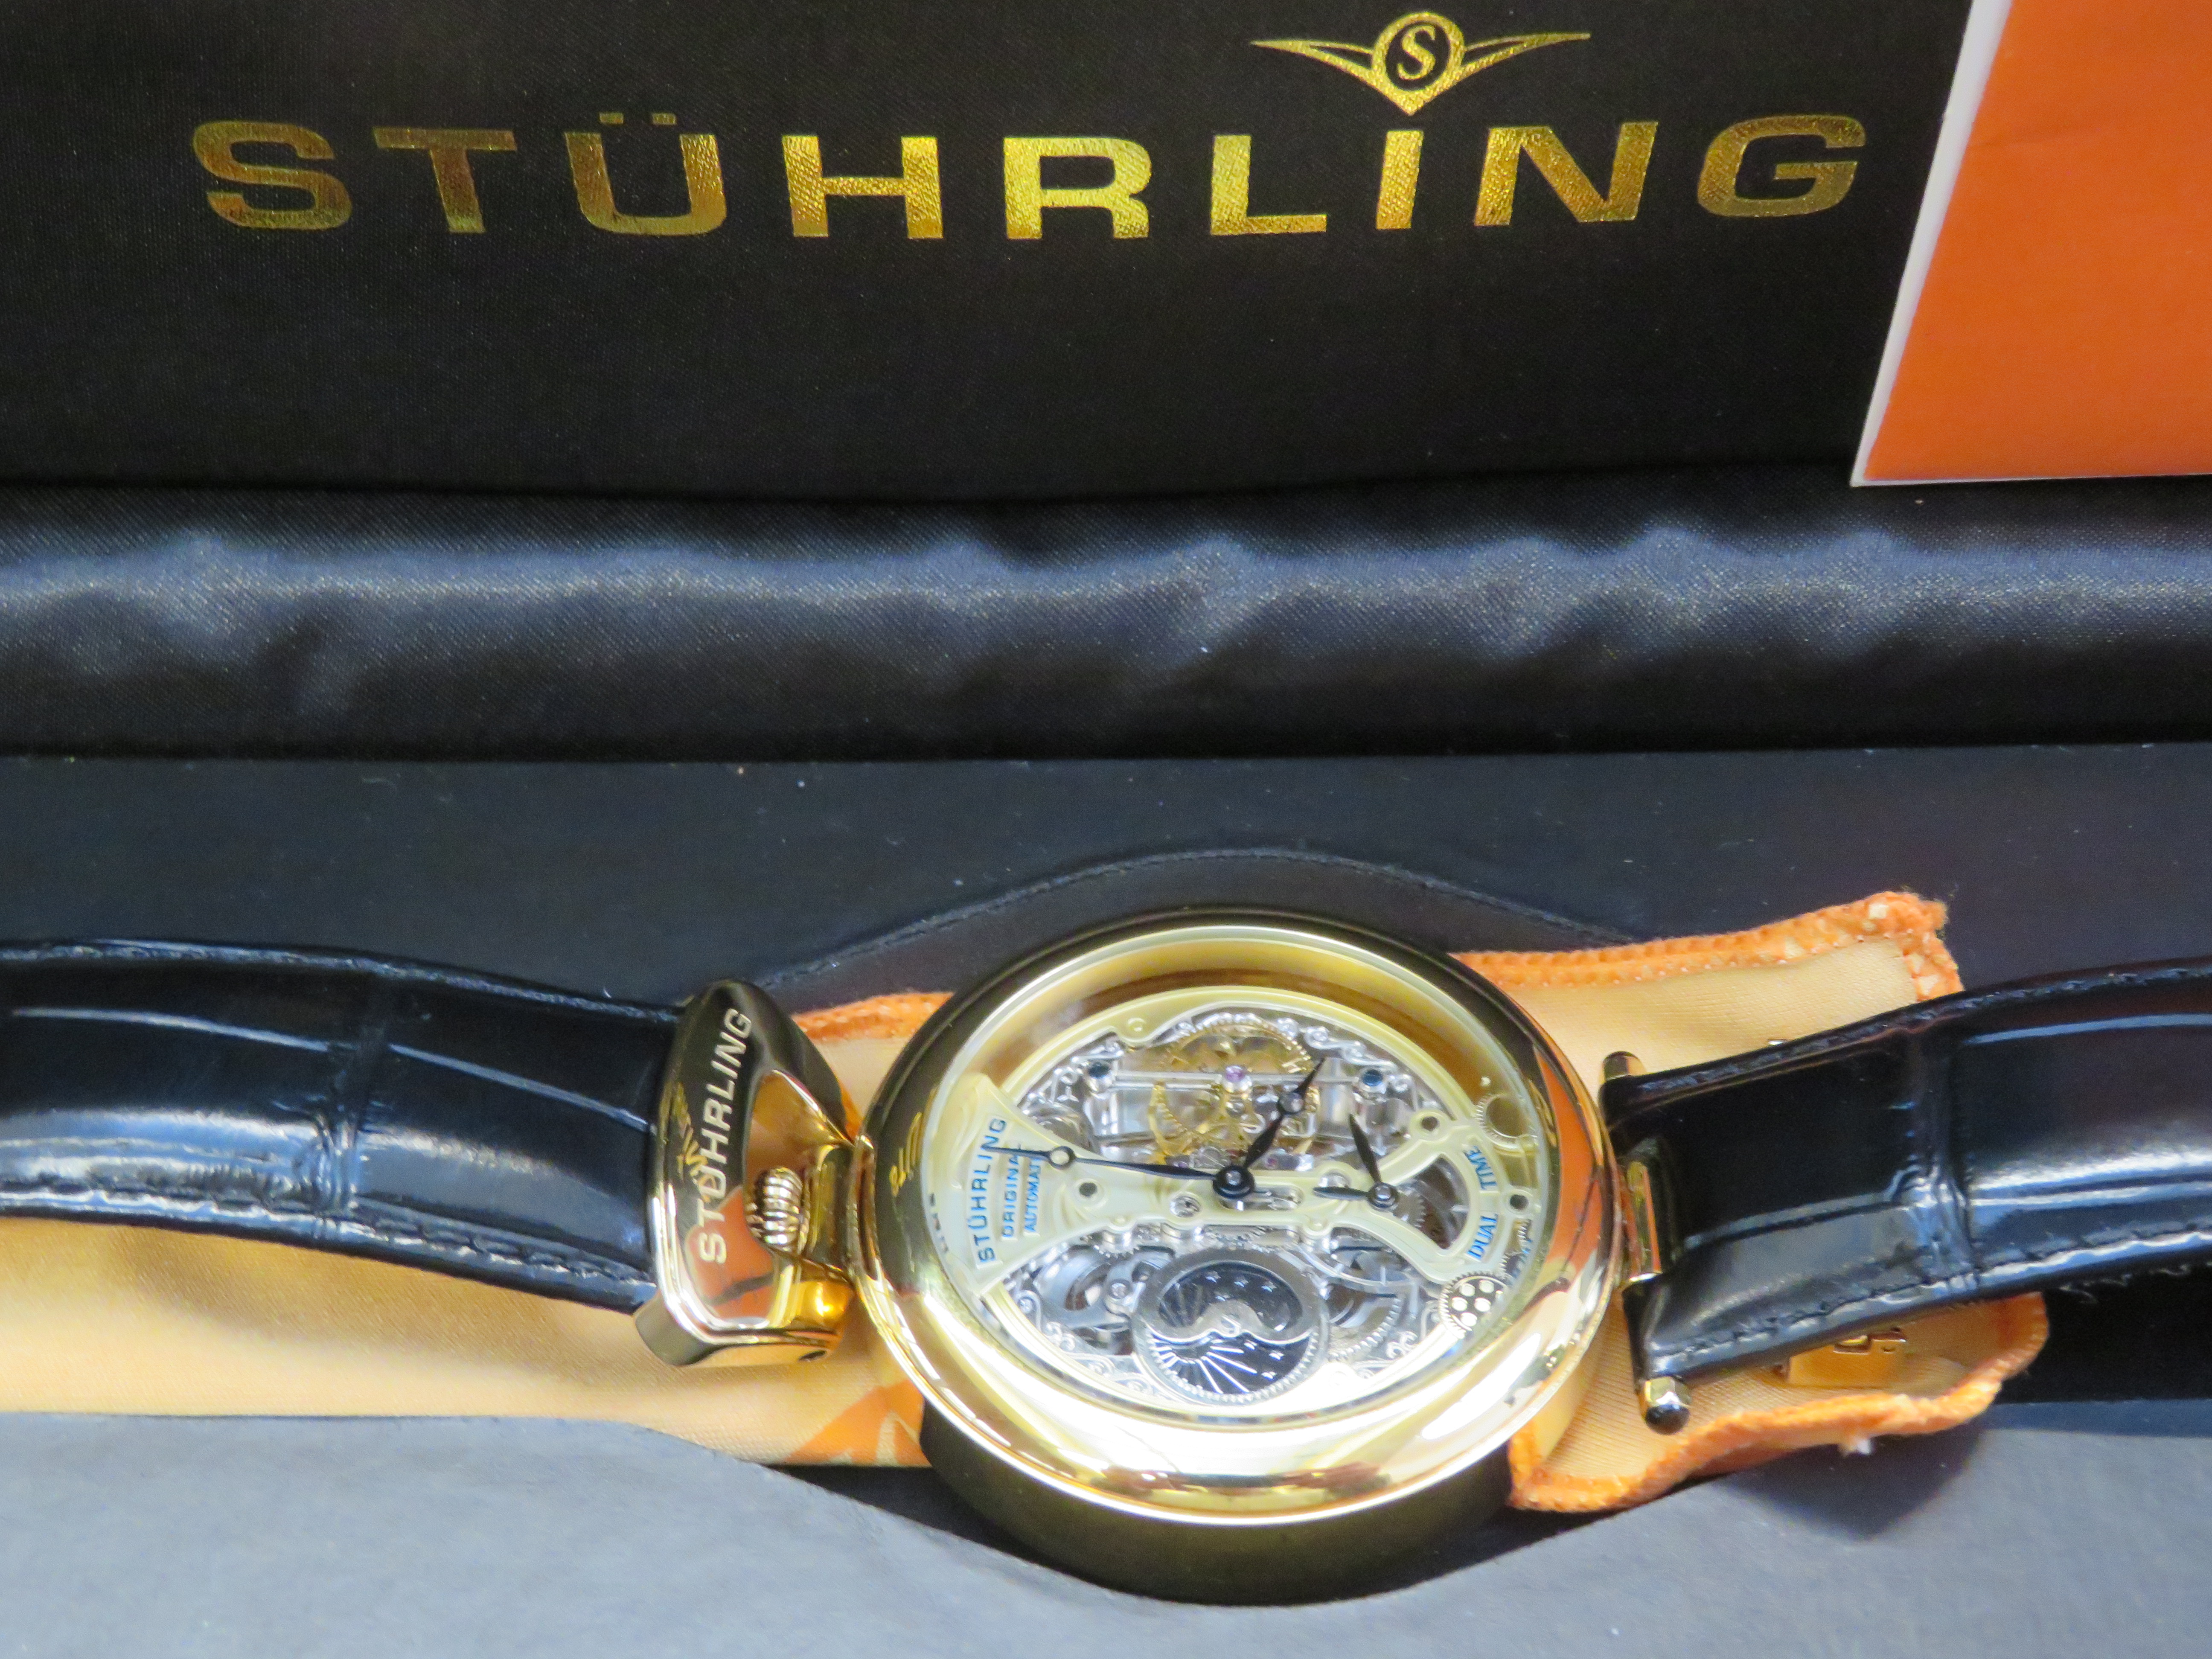 Stührling original, duel time automatic wristwatch